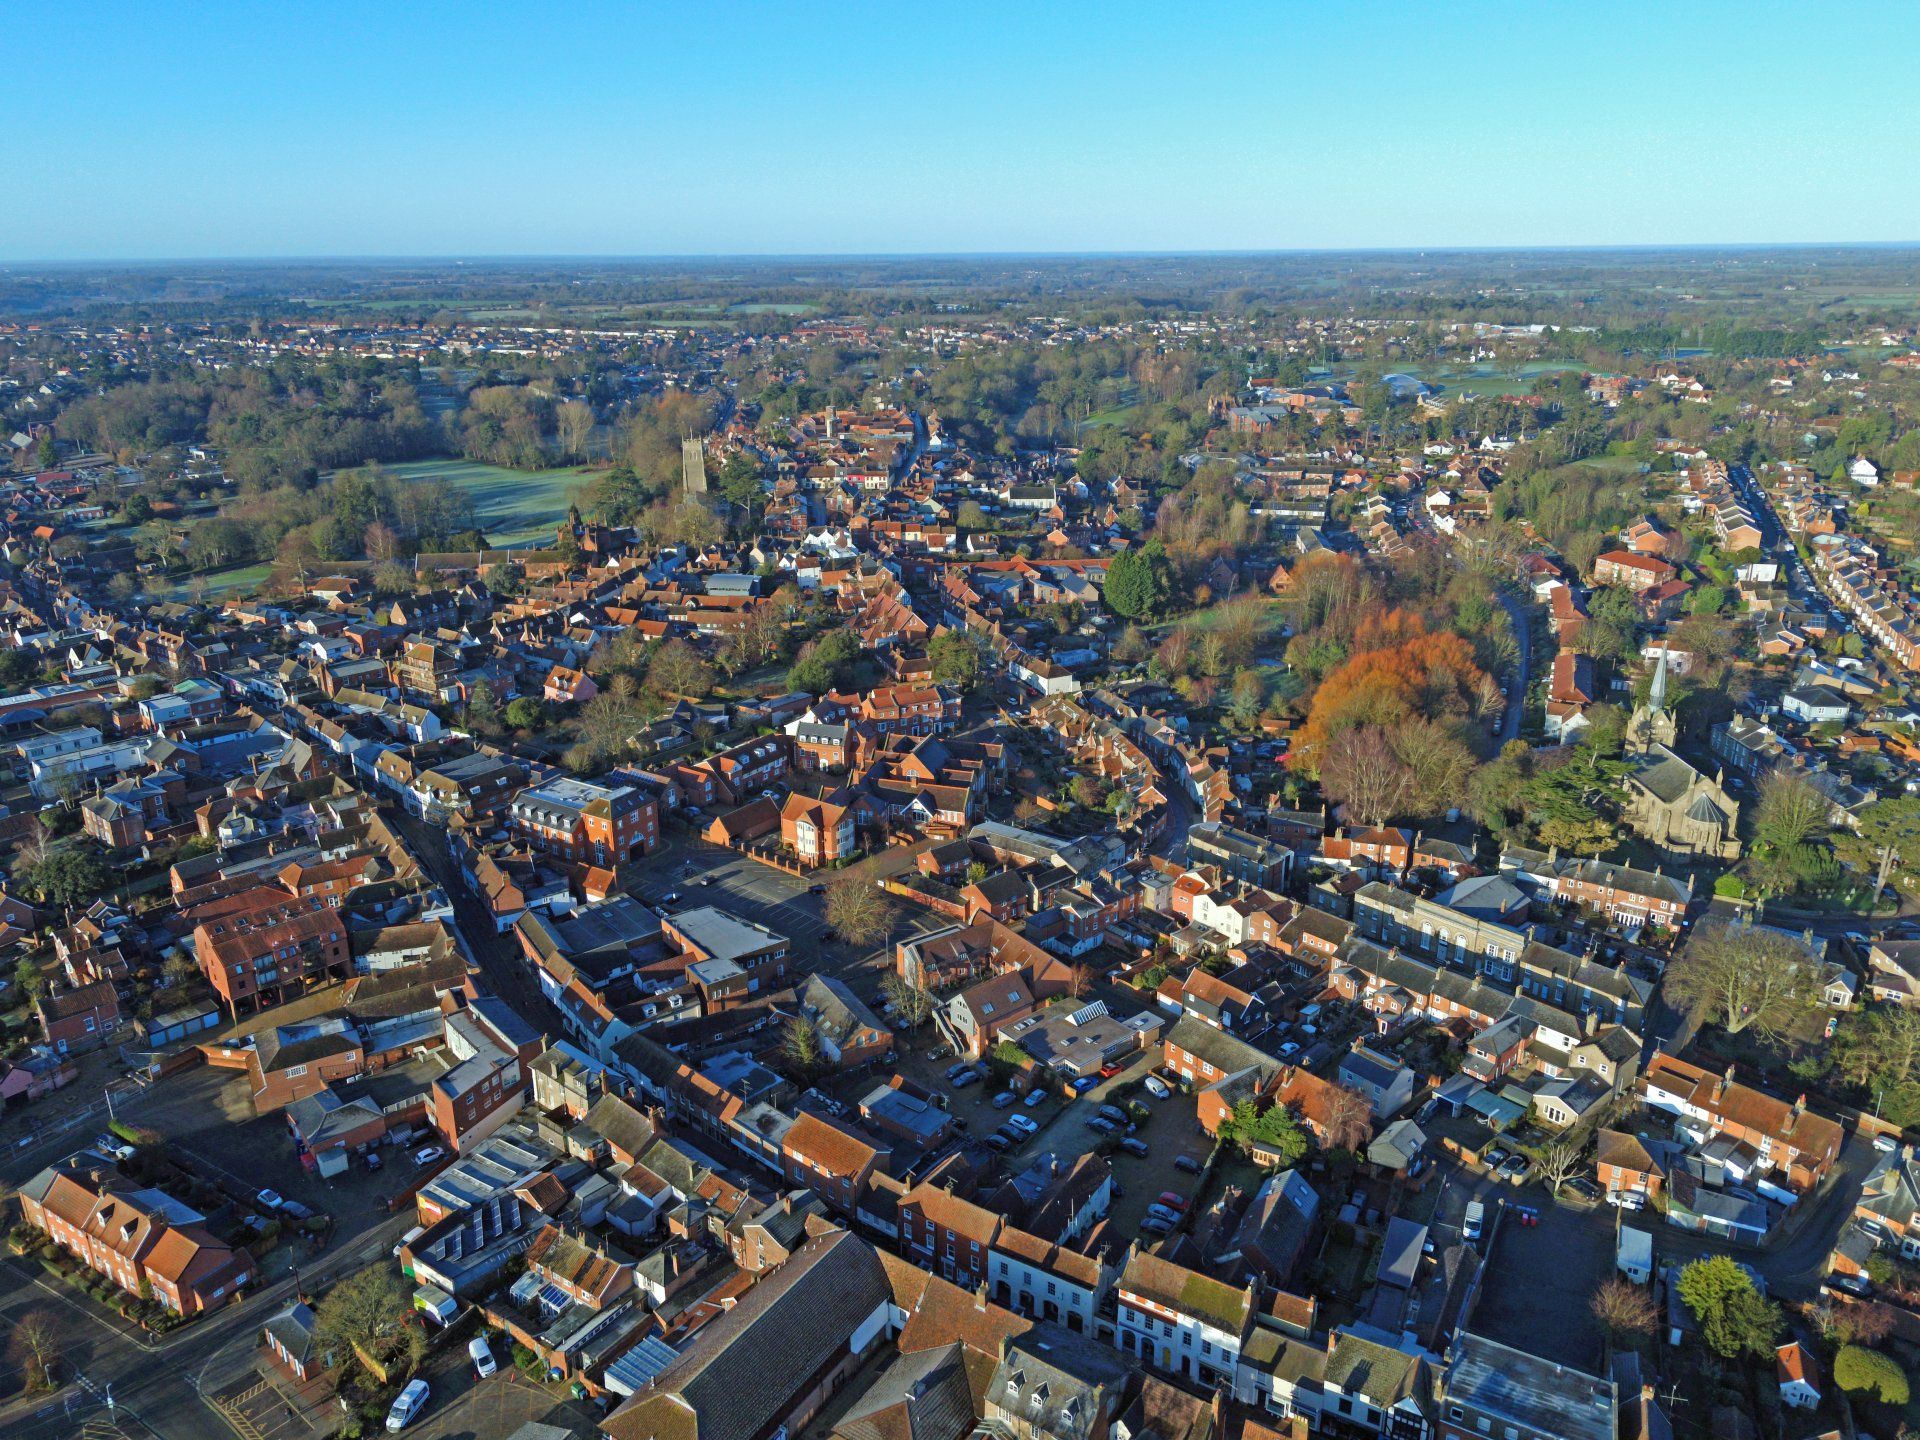 Aerial photo of Woodbridge town centre - David Mortimer